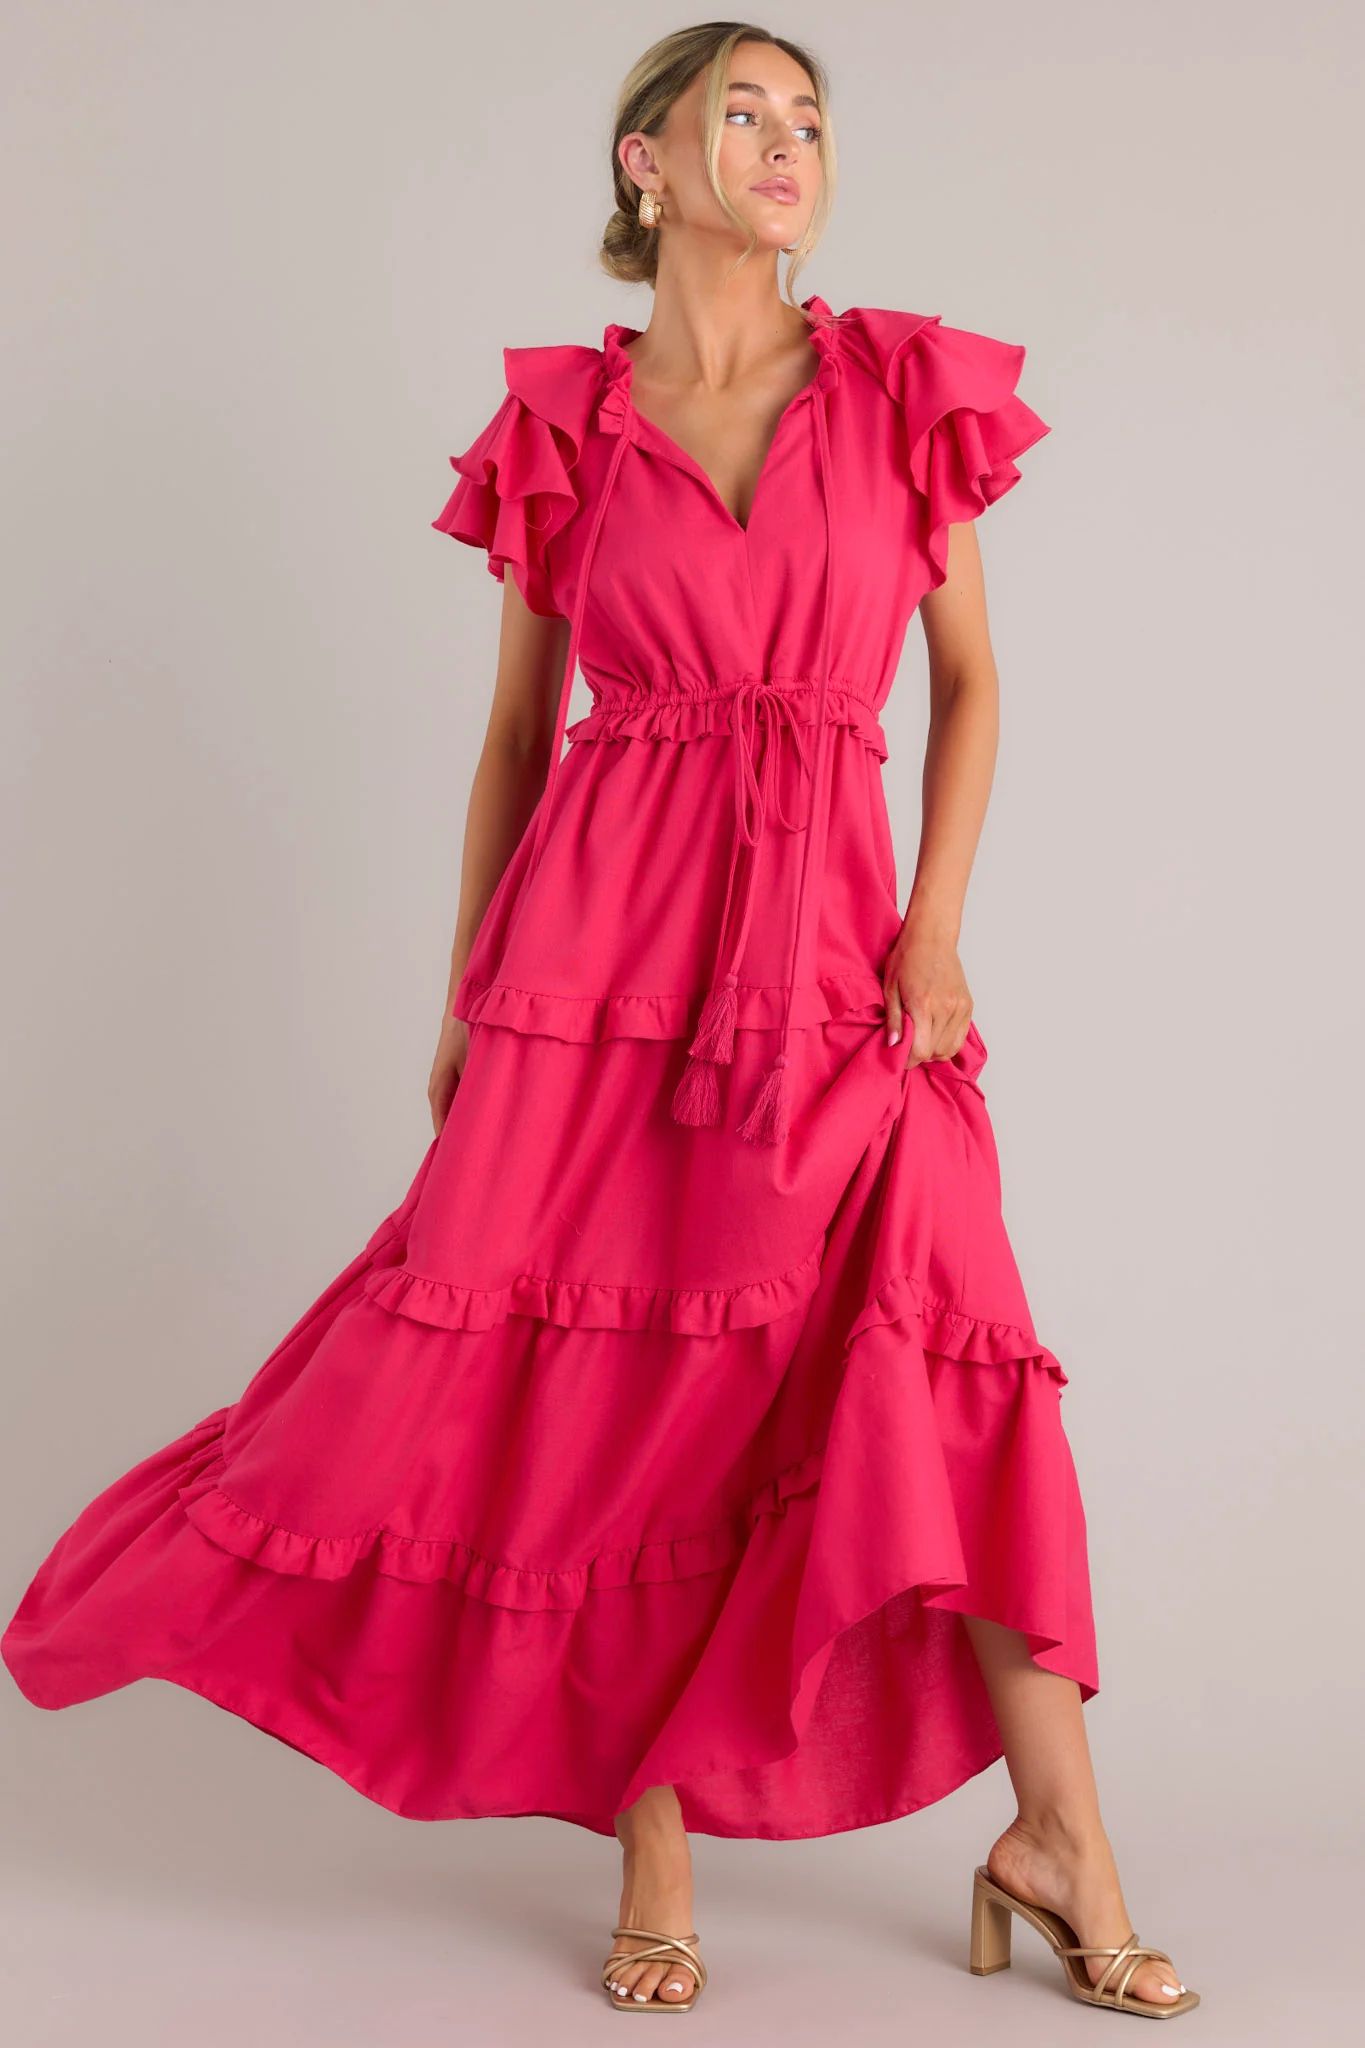 Ruffle Some Feathers Lipstick Pink Maxi Dress | Red Dress